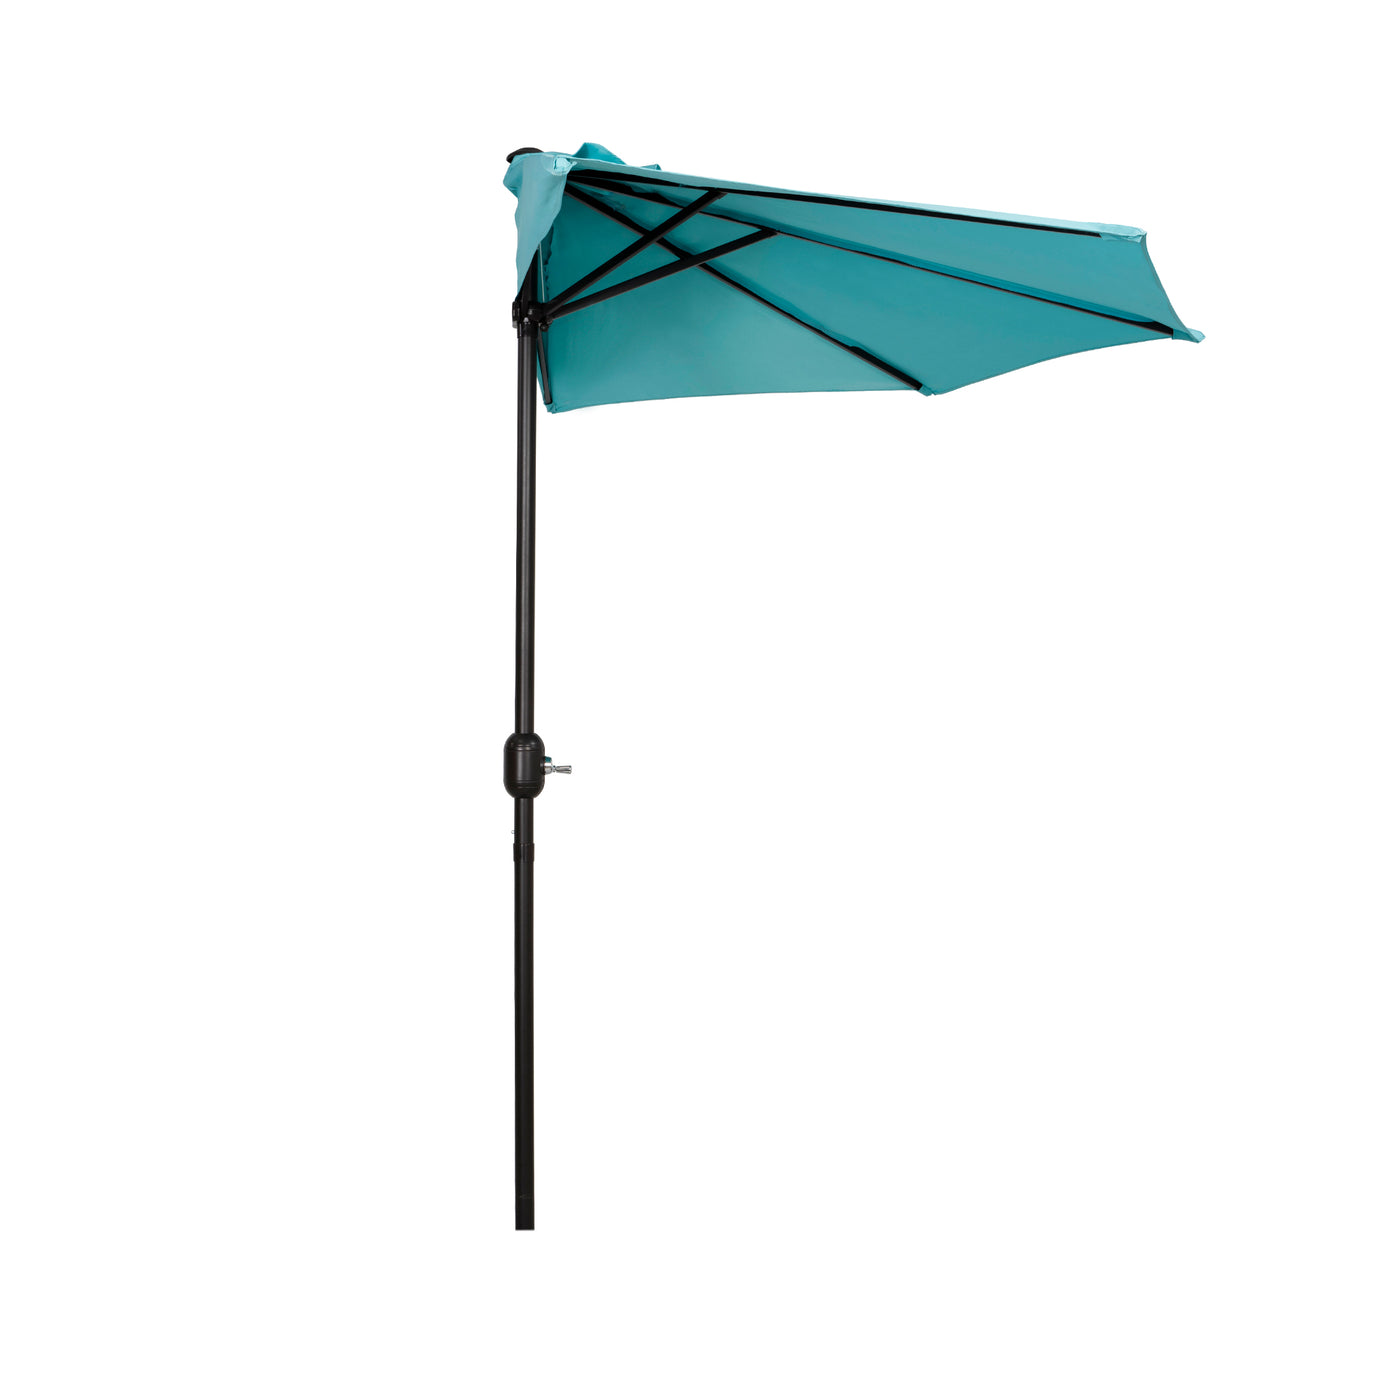 Lanai 9 ft. Half Market Patio Umbrella with Concrete Base